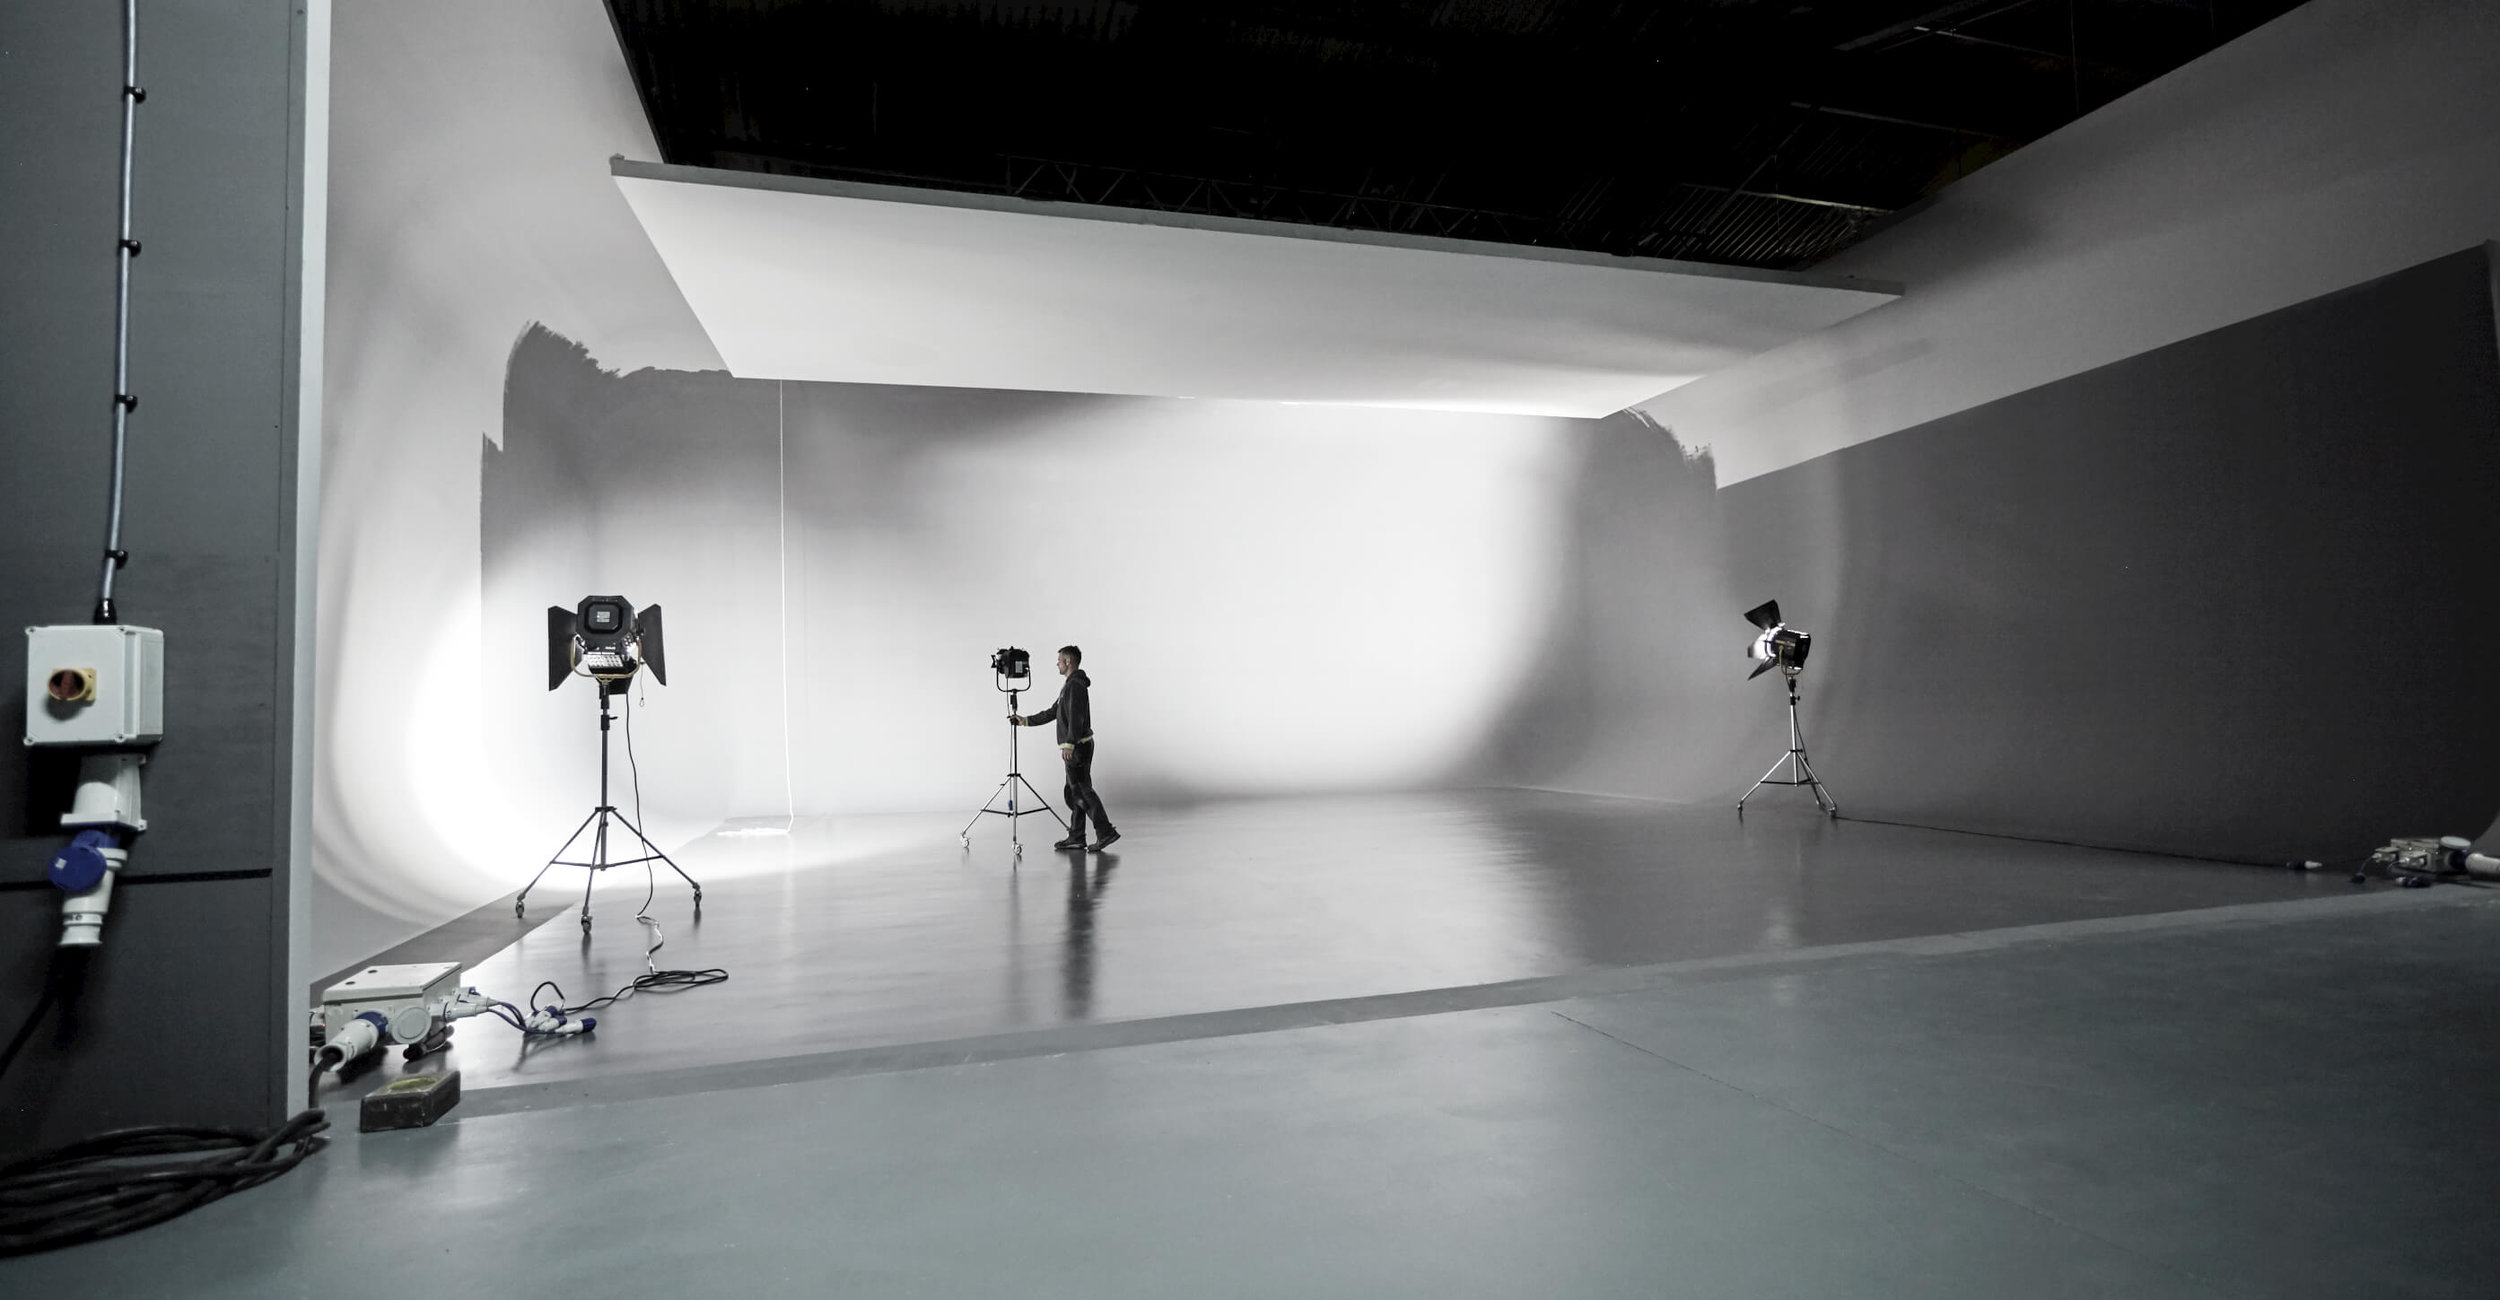 Studio-1-one-moorland-studios-large-photography-space-uk-midlands-man-moving-lighting-stand-infinity-cove.jpg